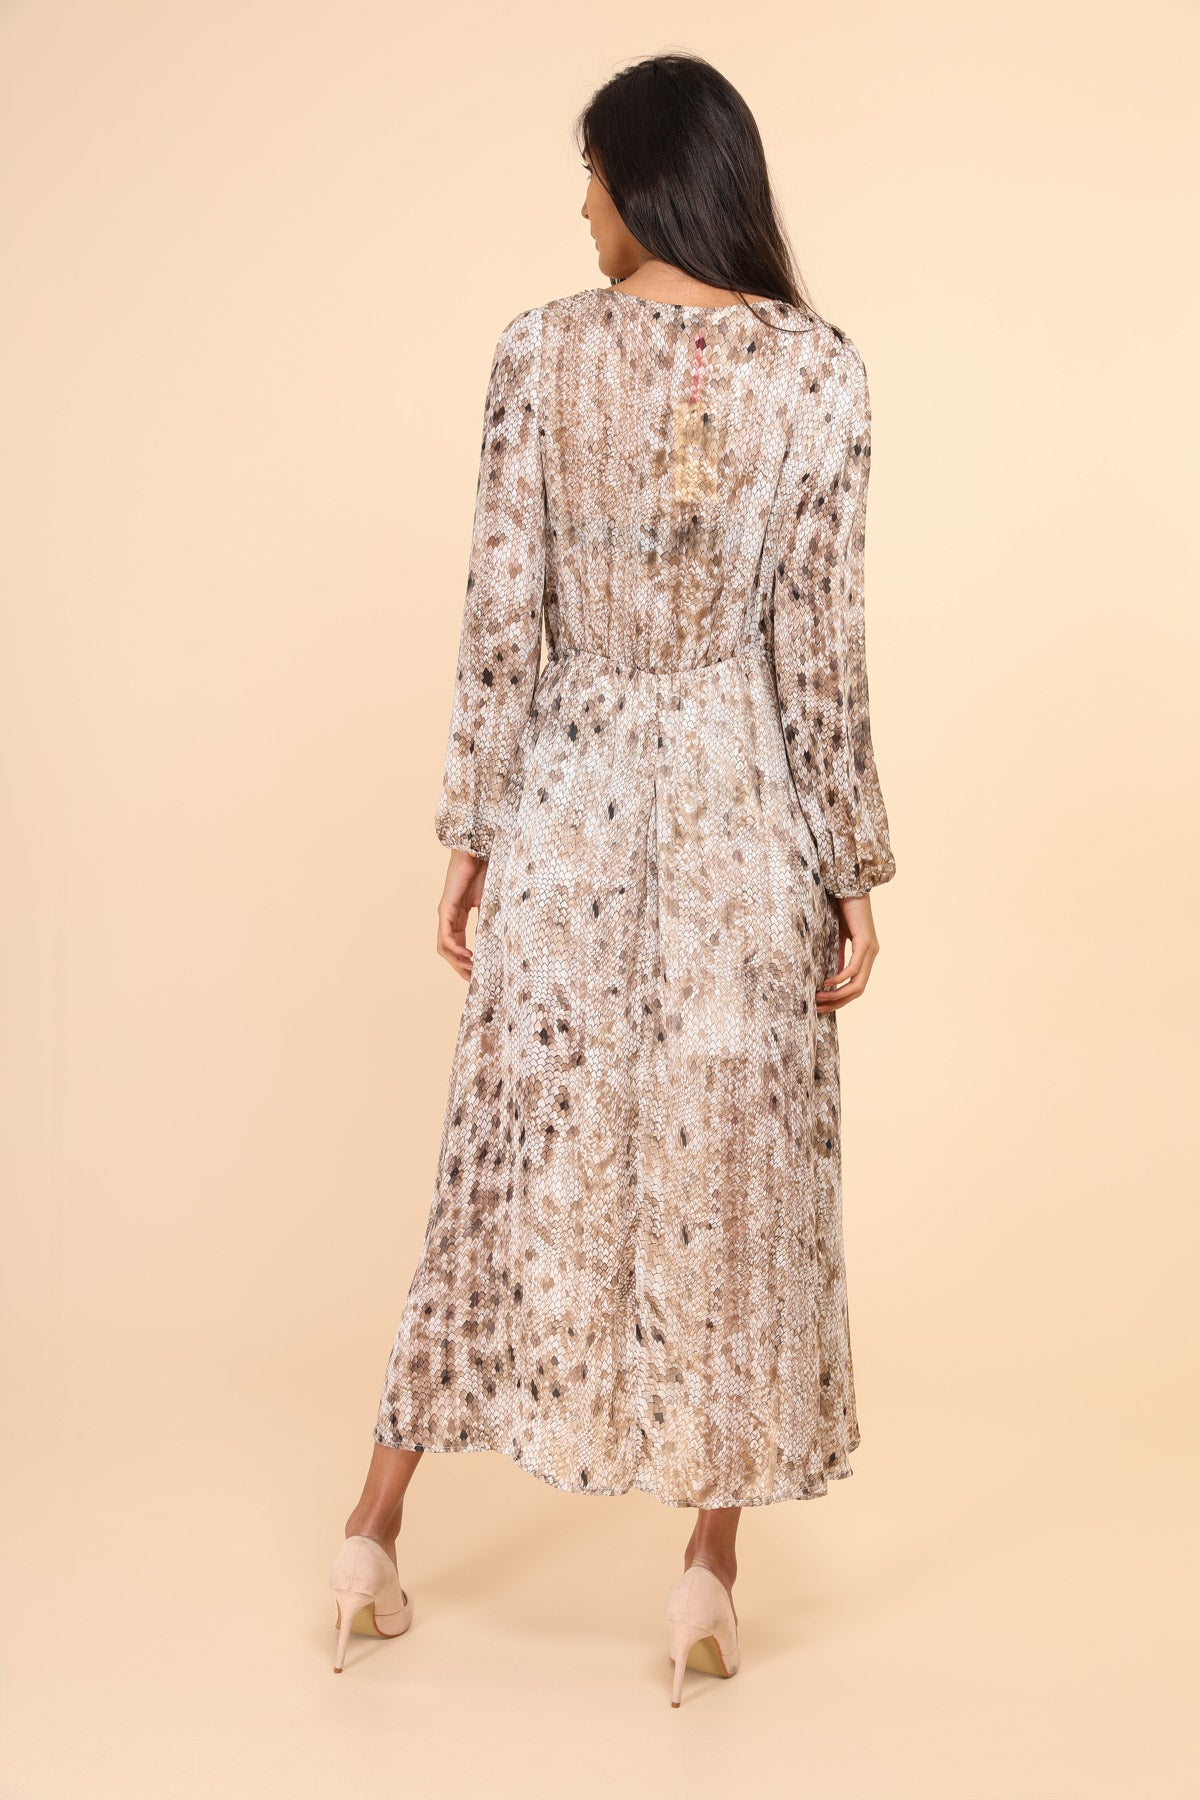 Alexia - Boheme kjole med glitter